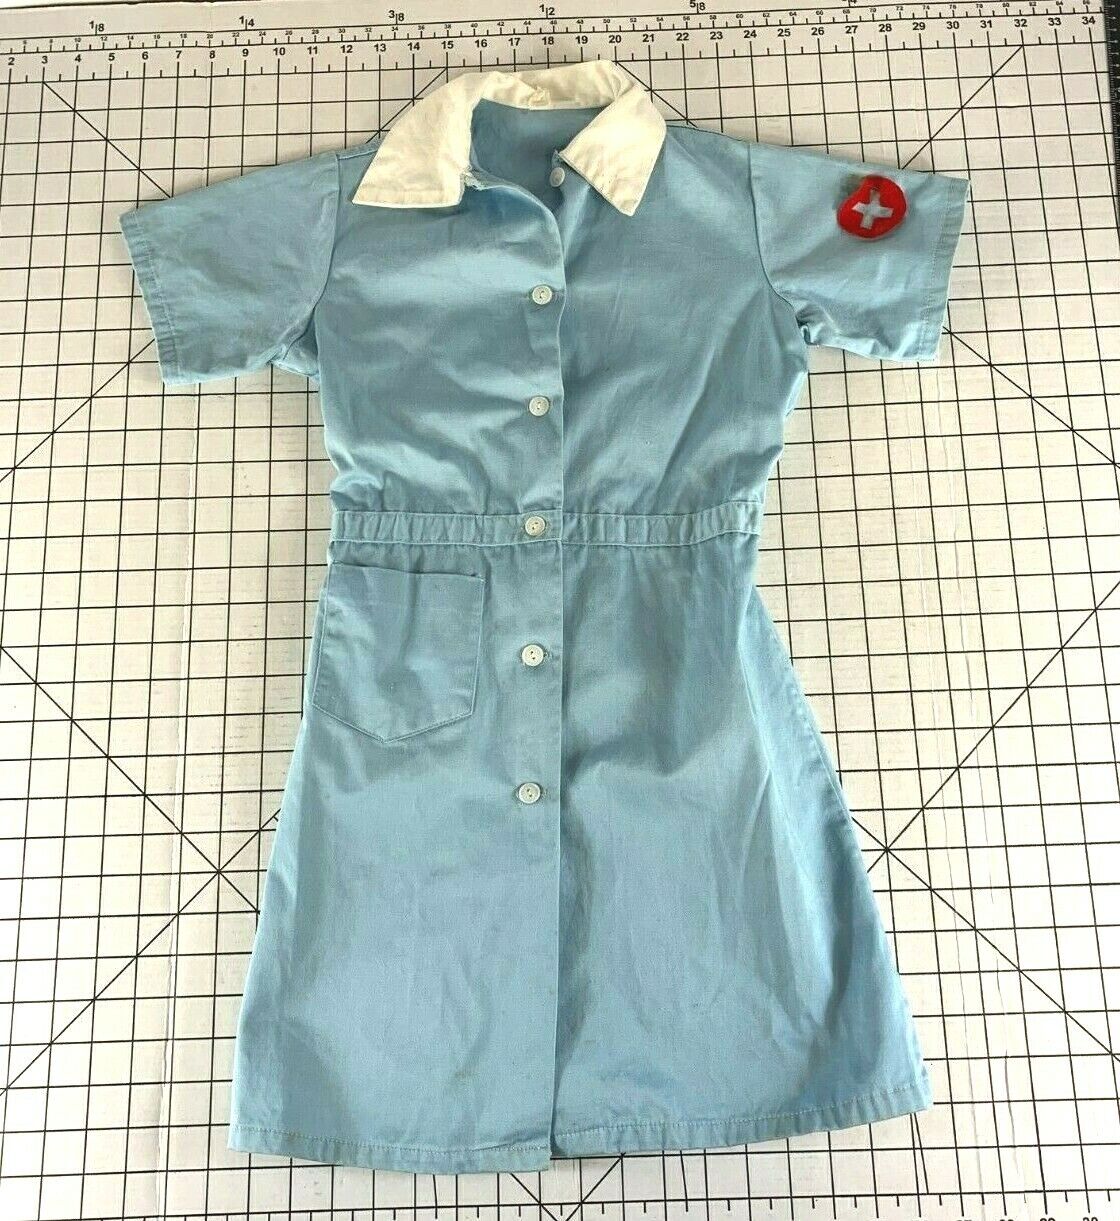 Vintage 50s 60s Nurse Outfit Uniform Medical Hospital Doctor Dress Red  Cross Top